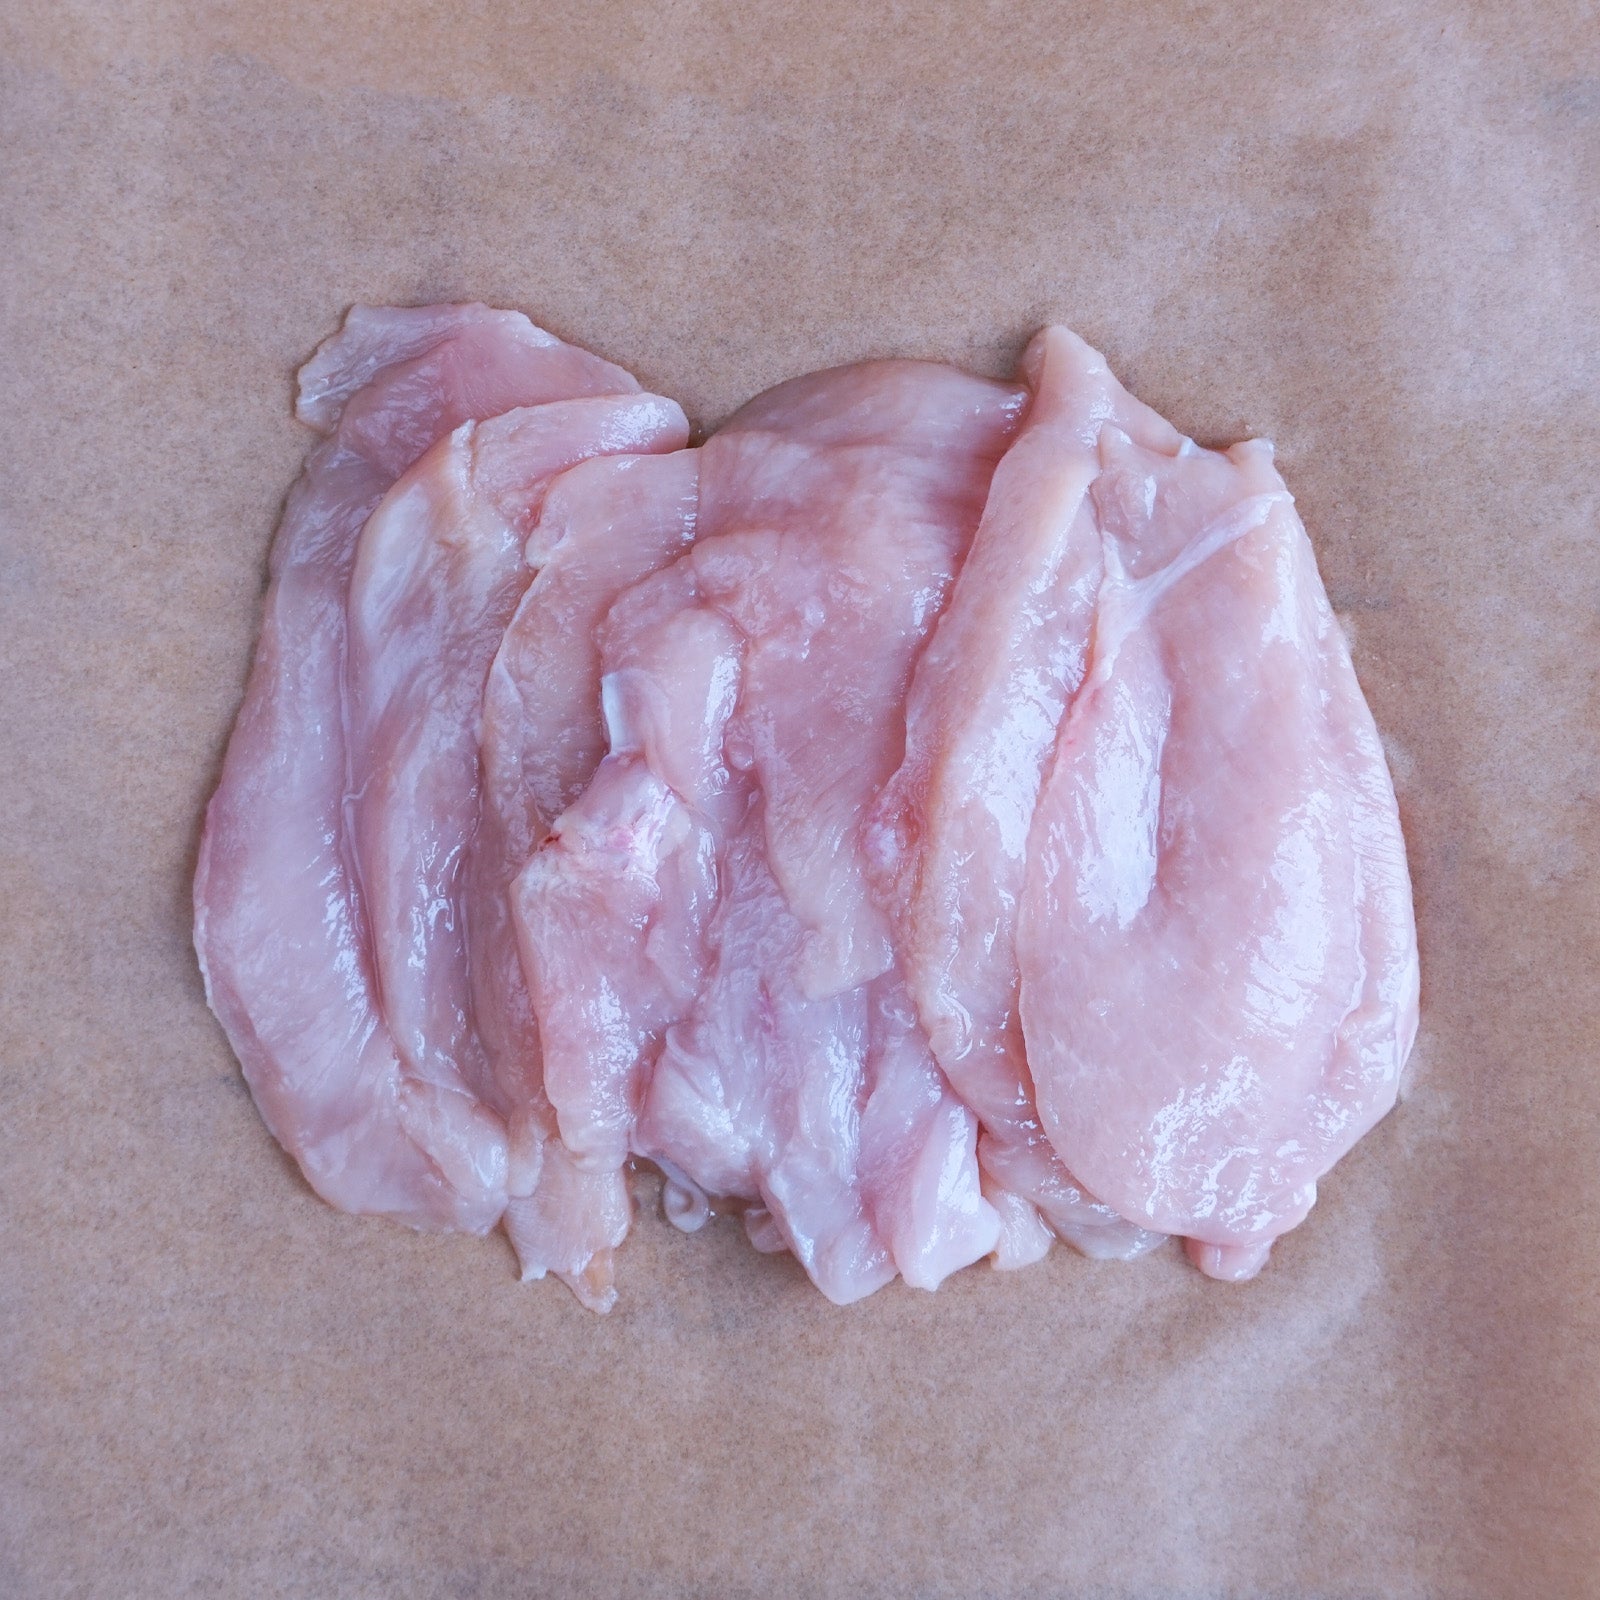 New Zealand Certified Organic Free-Range Chicken Breast 10mm Slices (500g) - Horizon Farms